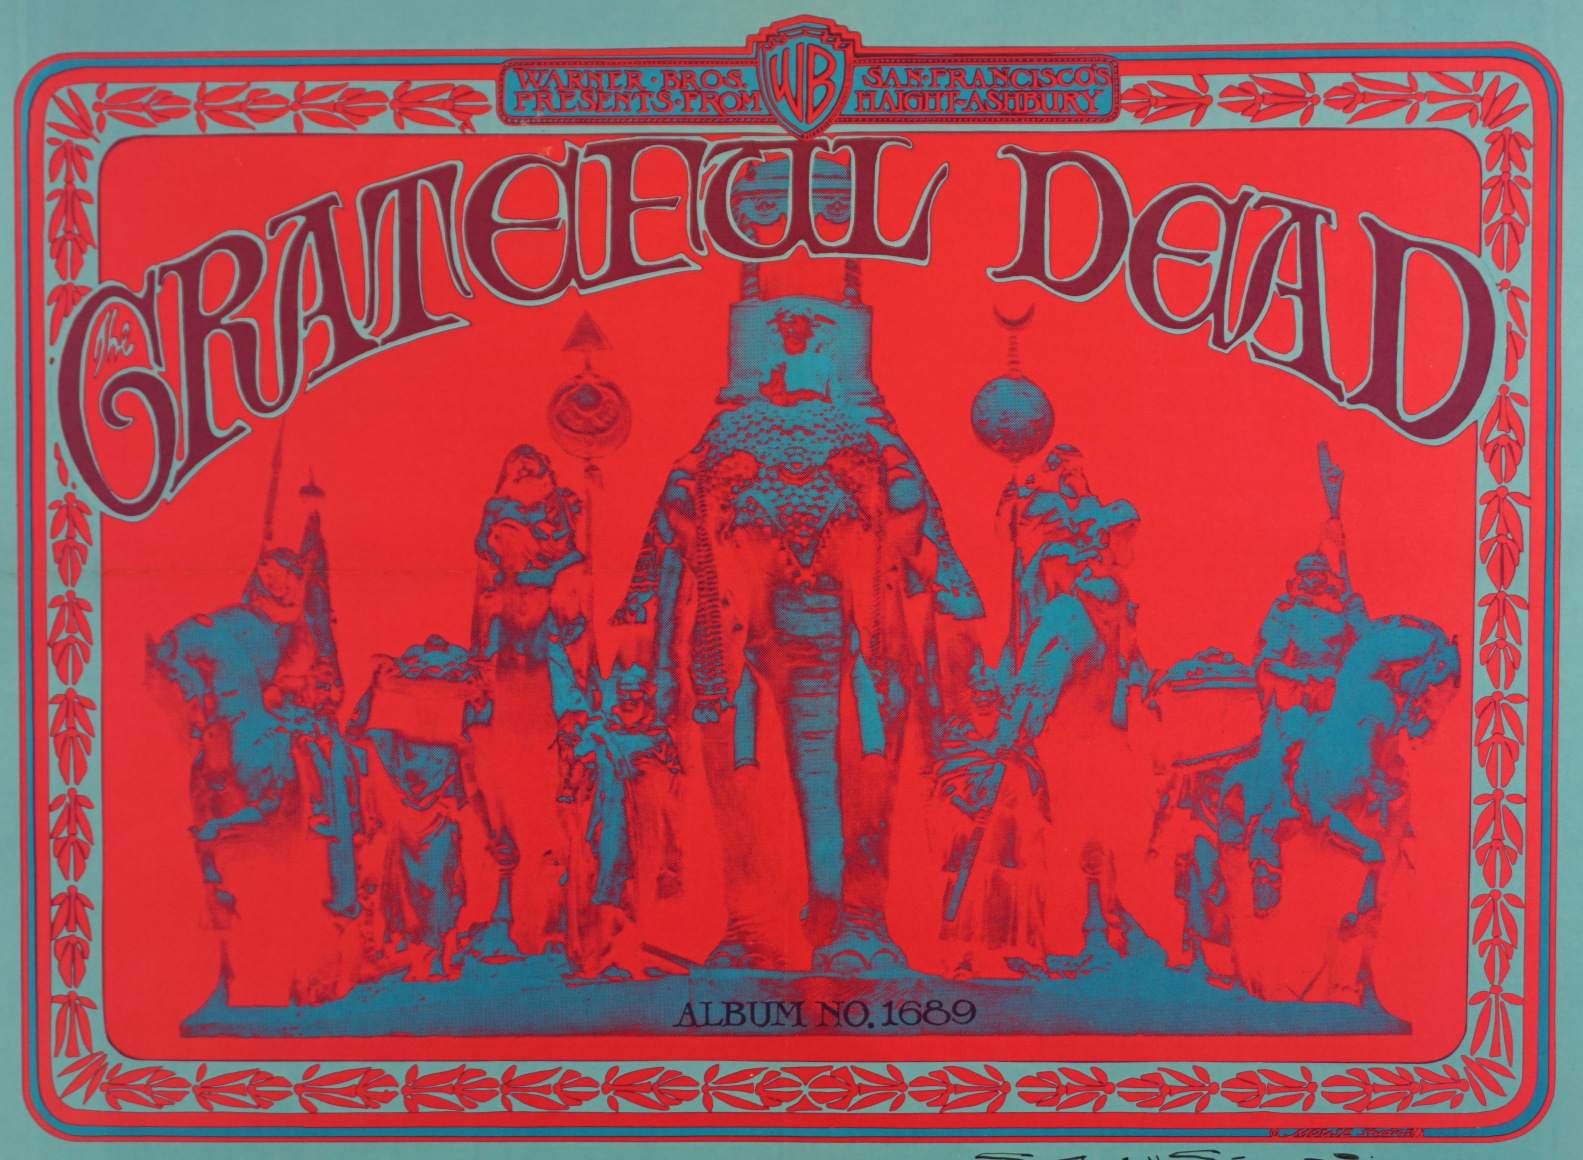 Grateful Dead First Album Promotion Elephants Band Items Bahr Gallery